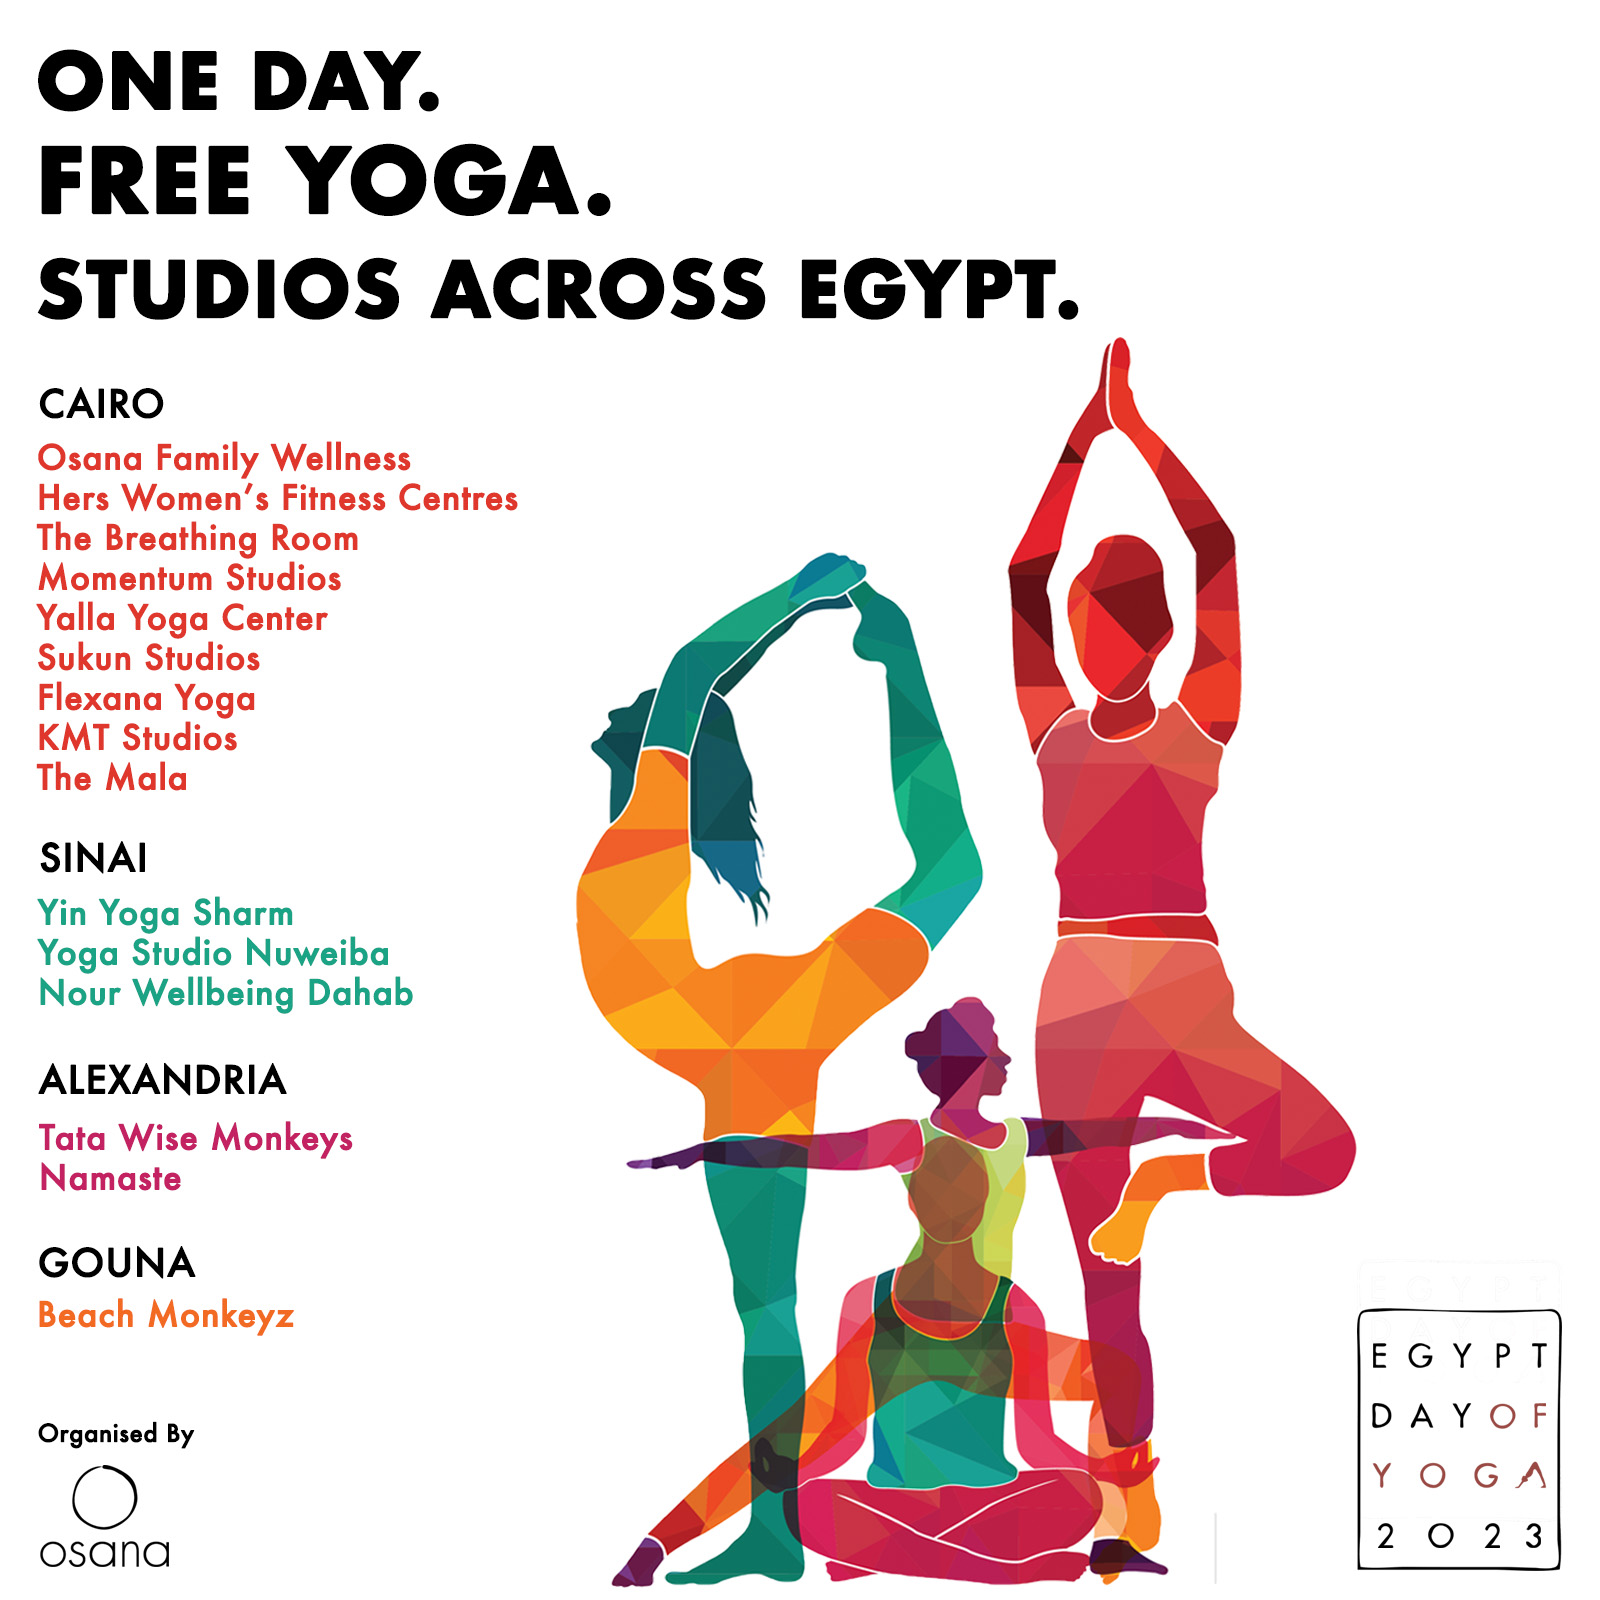 Osana Family Wellness Organises 4th Annual Egypt Day of Yoga